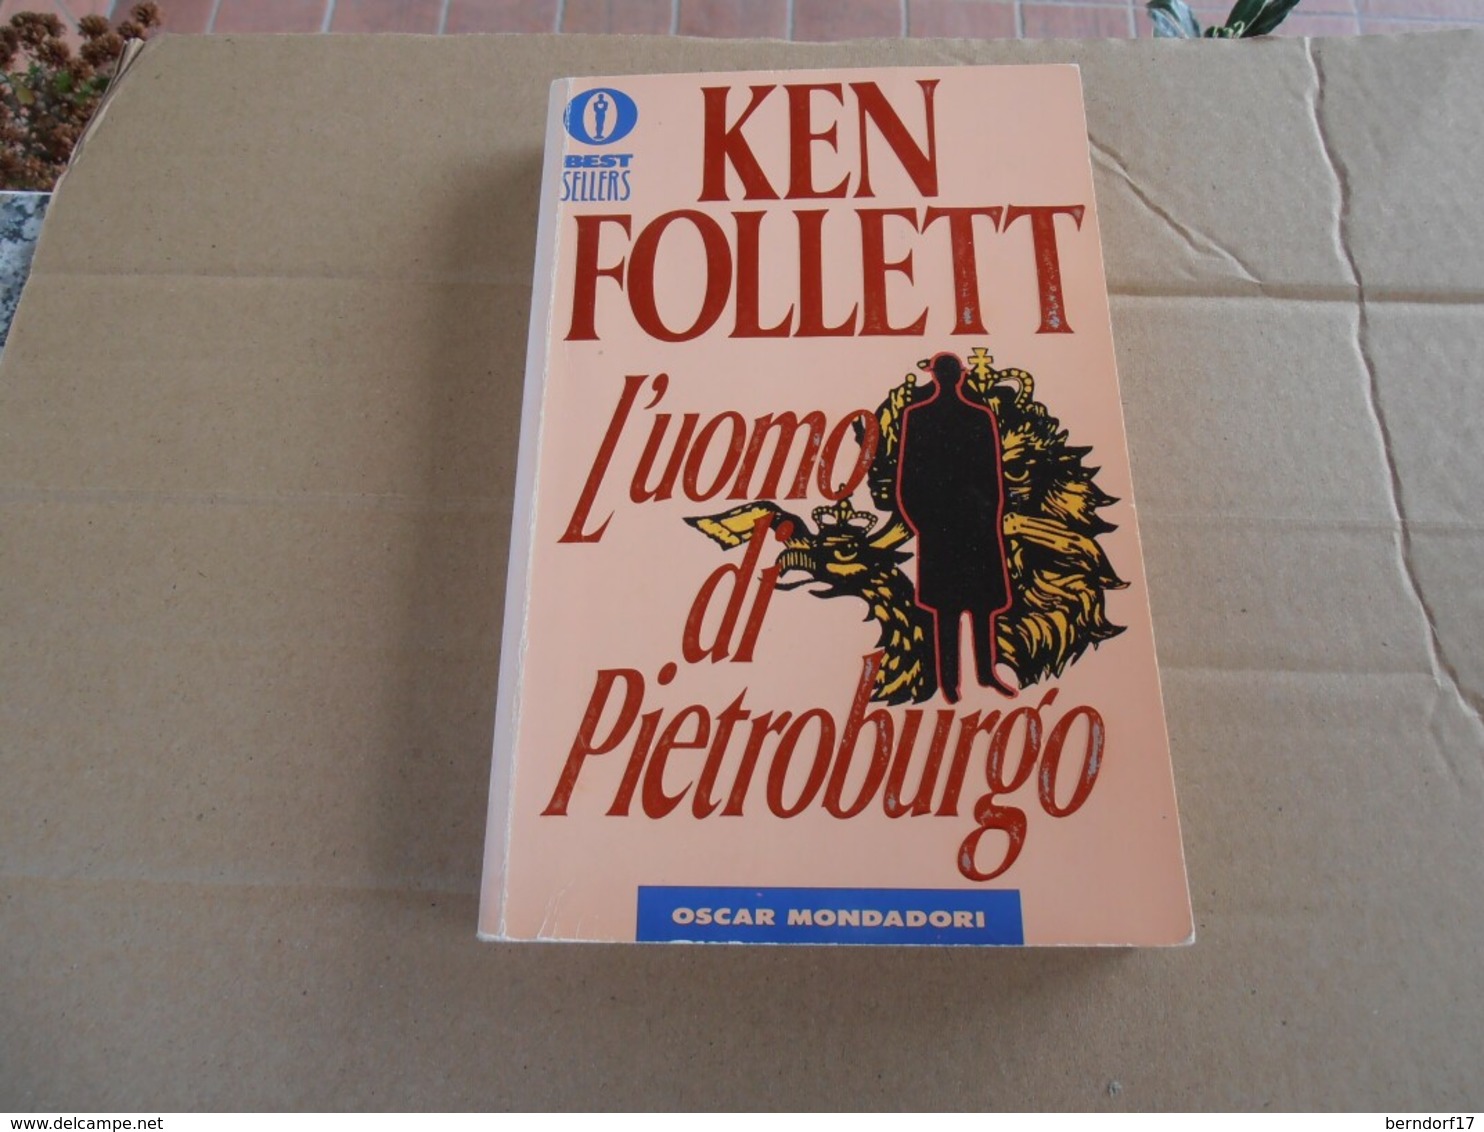 L'uomo Di Pietroburgo - Ken Follet - Famous Authors